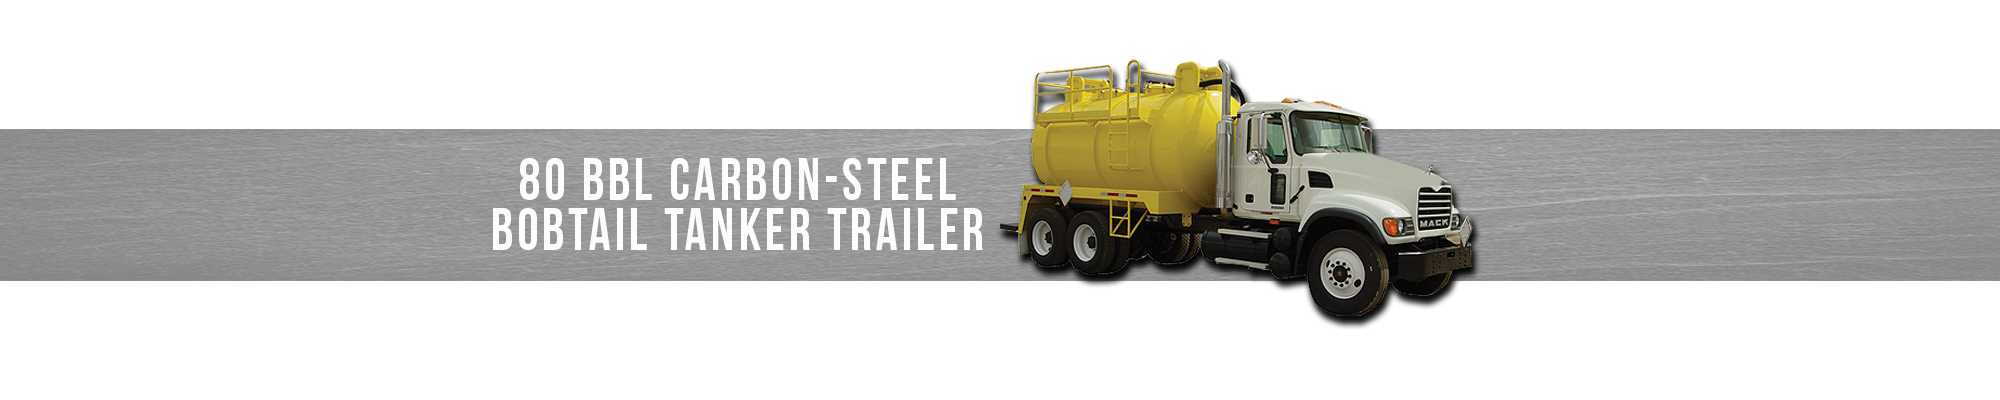 80 BBL Carbon-Steel Bobtail Tanker Trailer